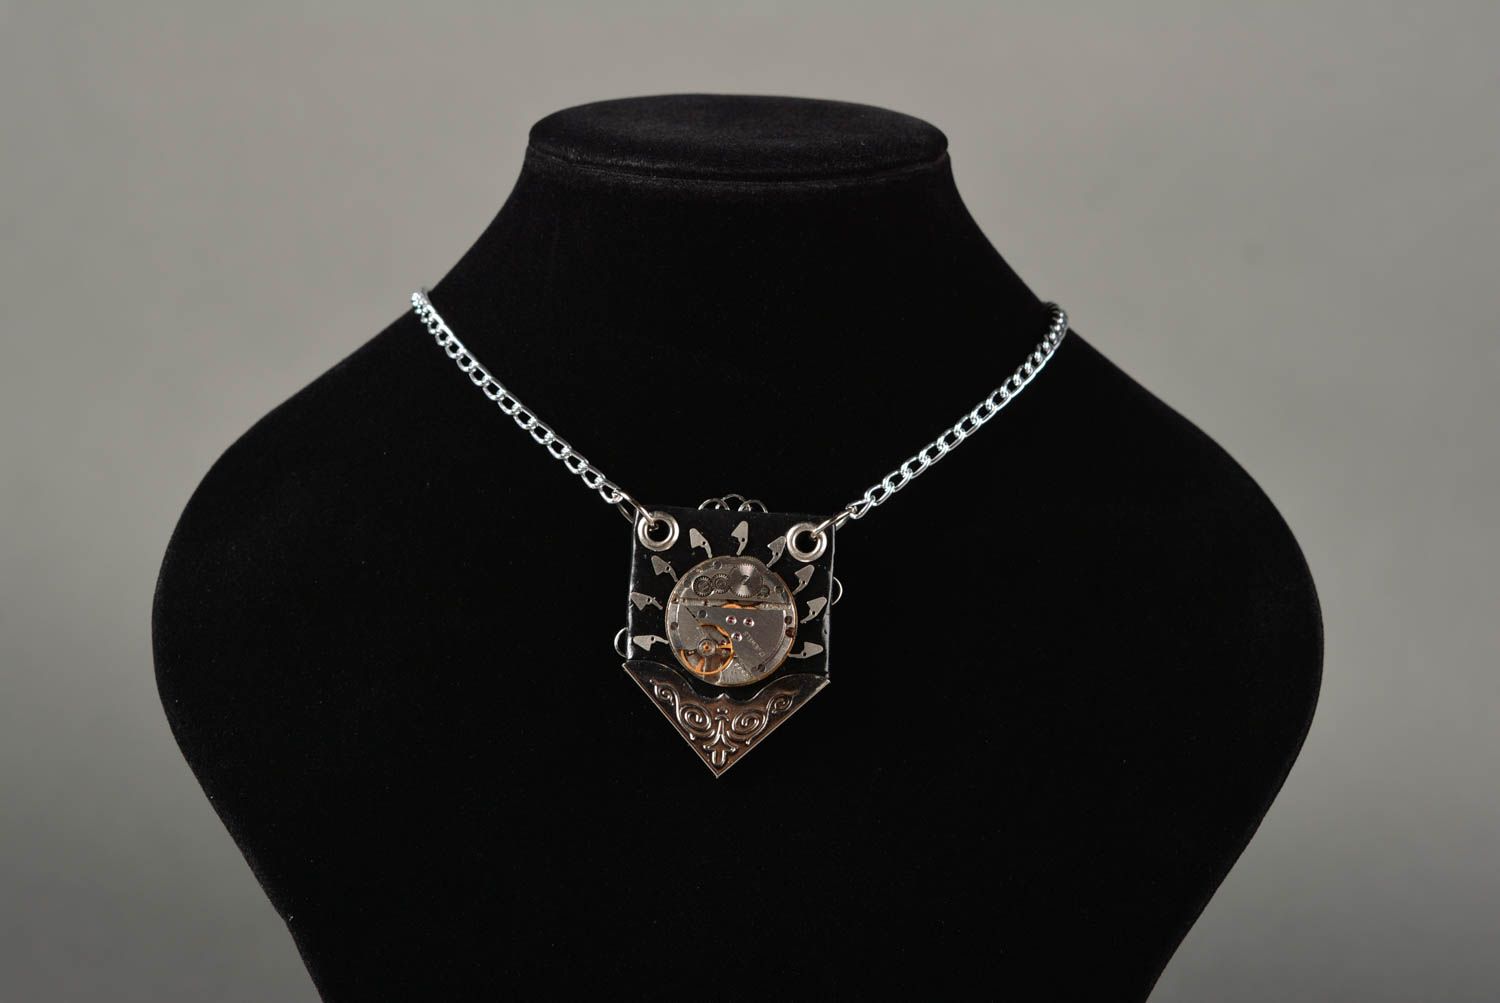 Handmade pendant designer pendant unusual accessory gift ideas beautiful jewelry photo 2